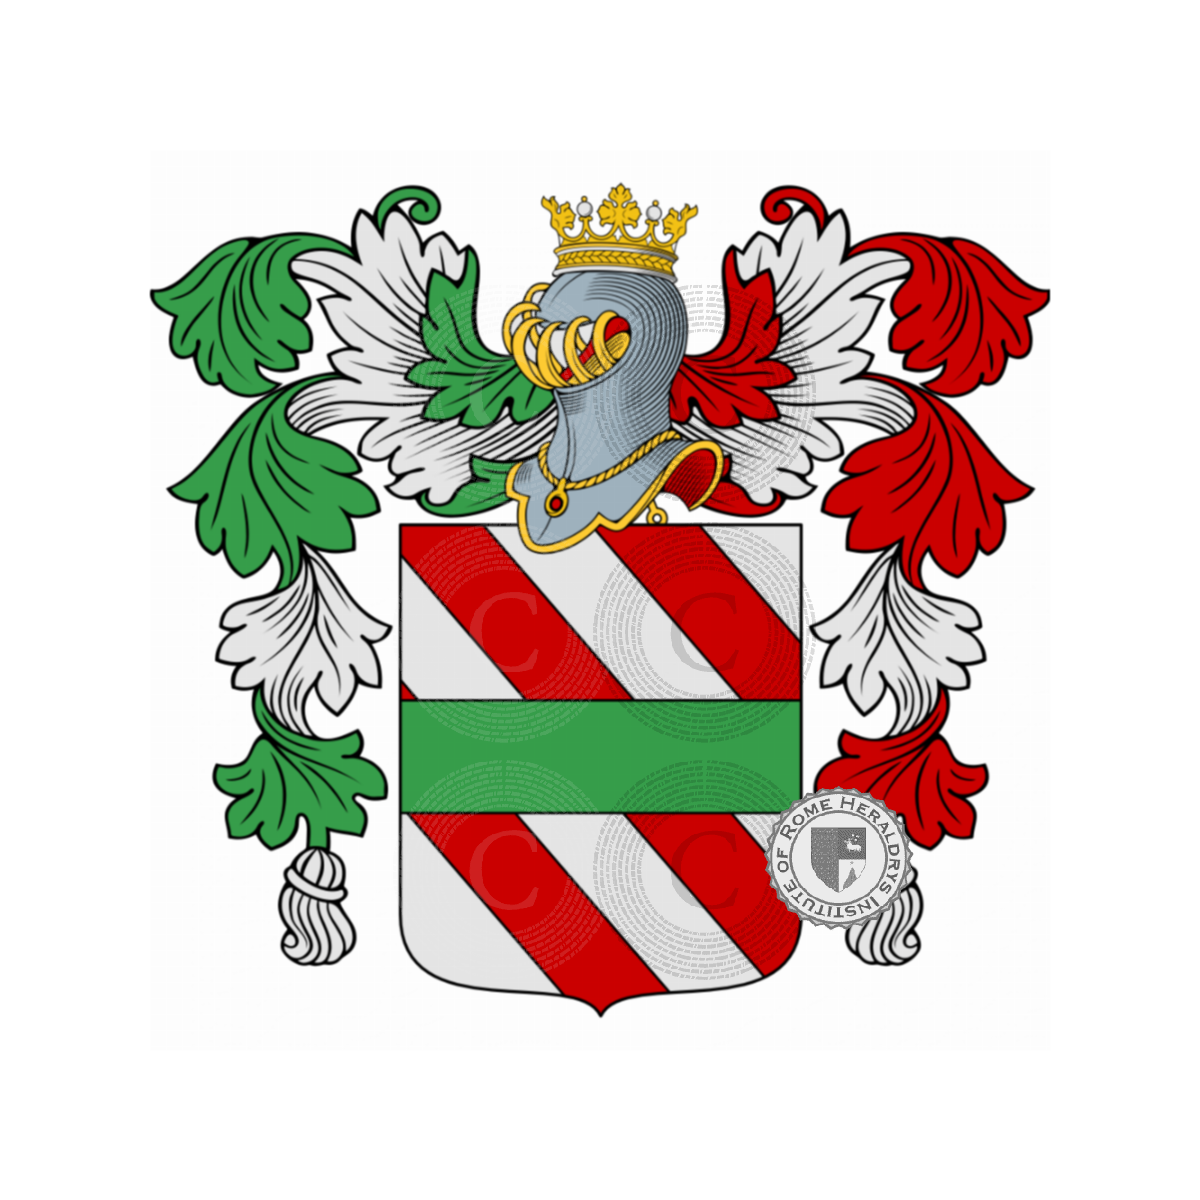 Wappen der FamilieSantacroce, da Santa Croce,Santa Croce,Santacroce Publicola